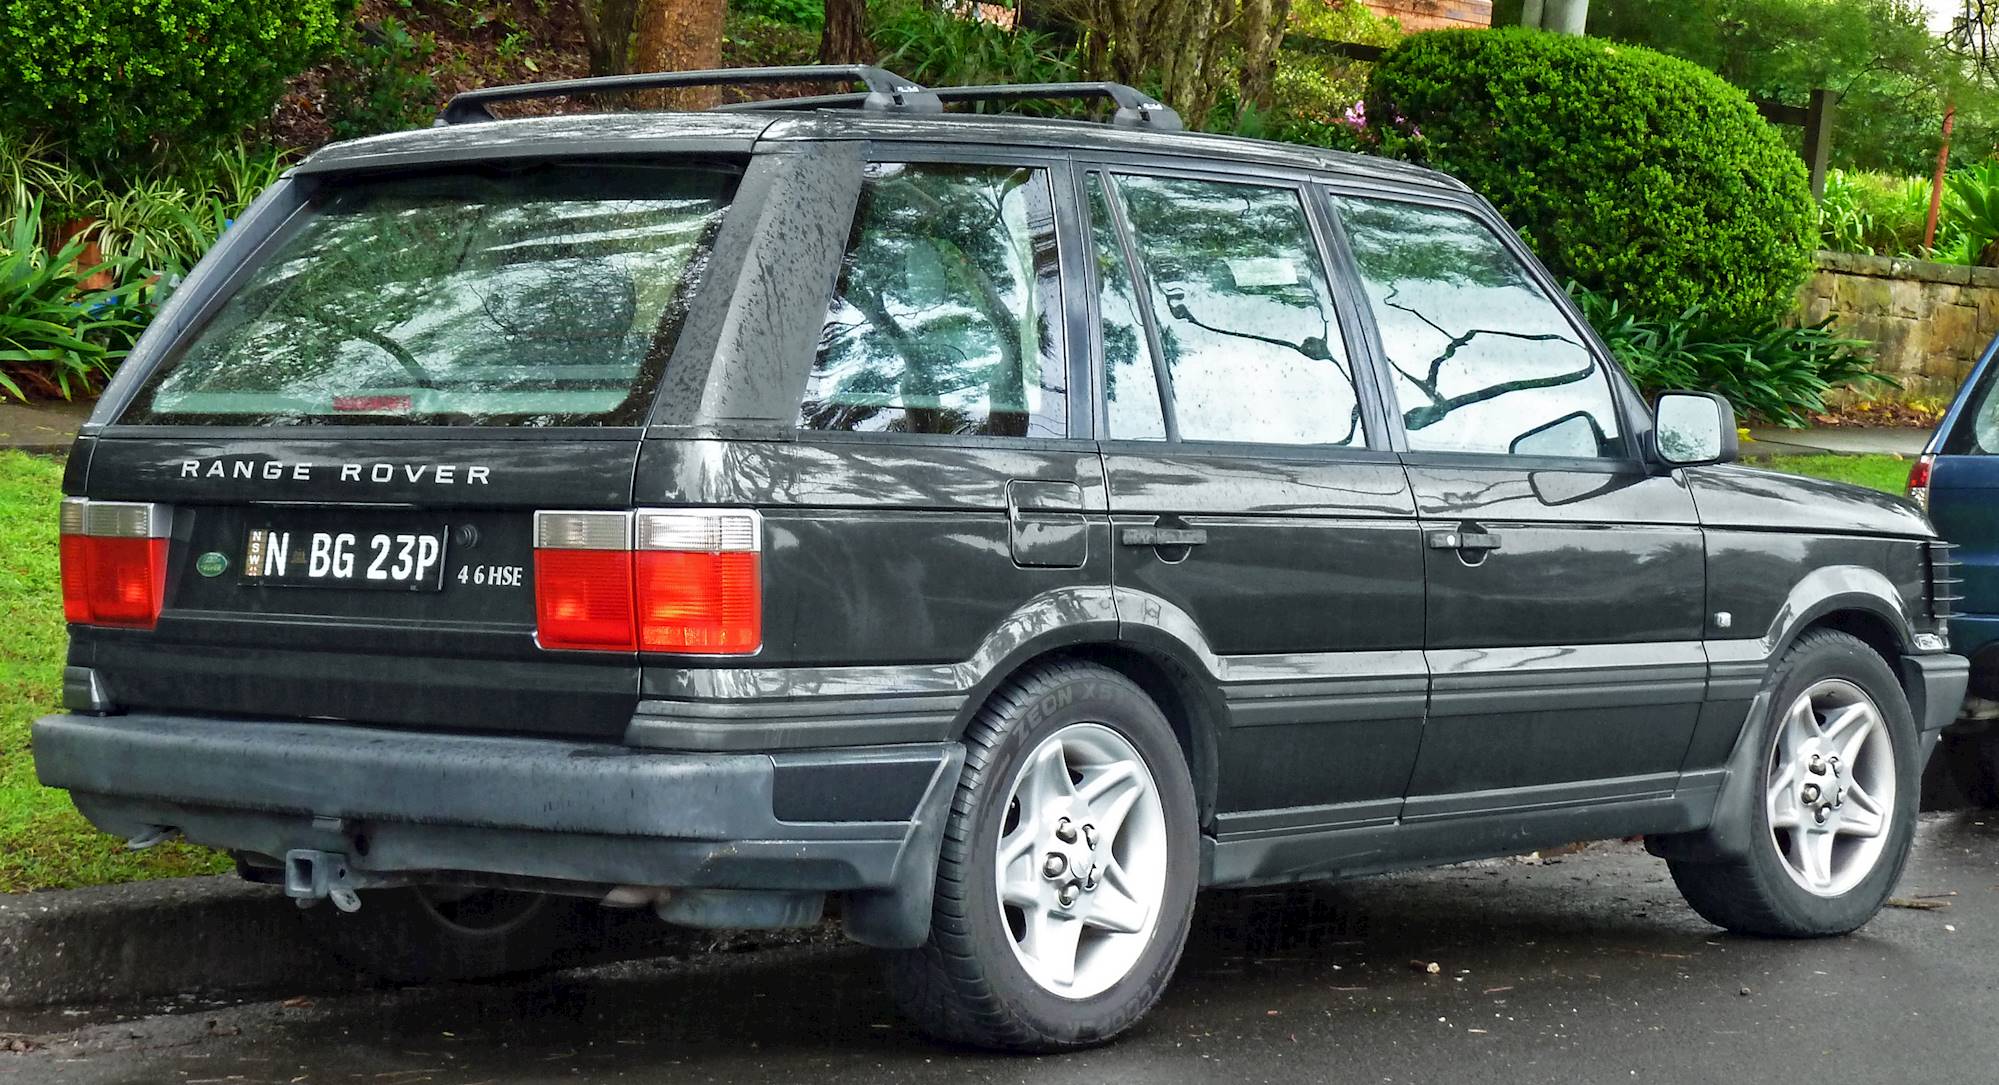 1998 Land Rover Range Rover 4.6 HSE - 4dr SUV V8 AWD auto